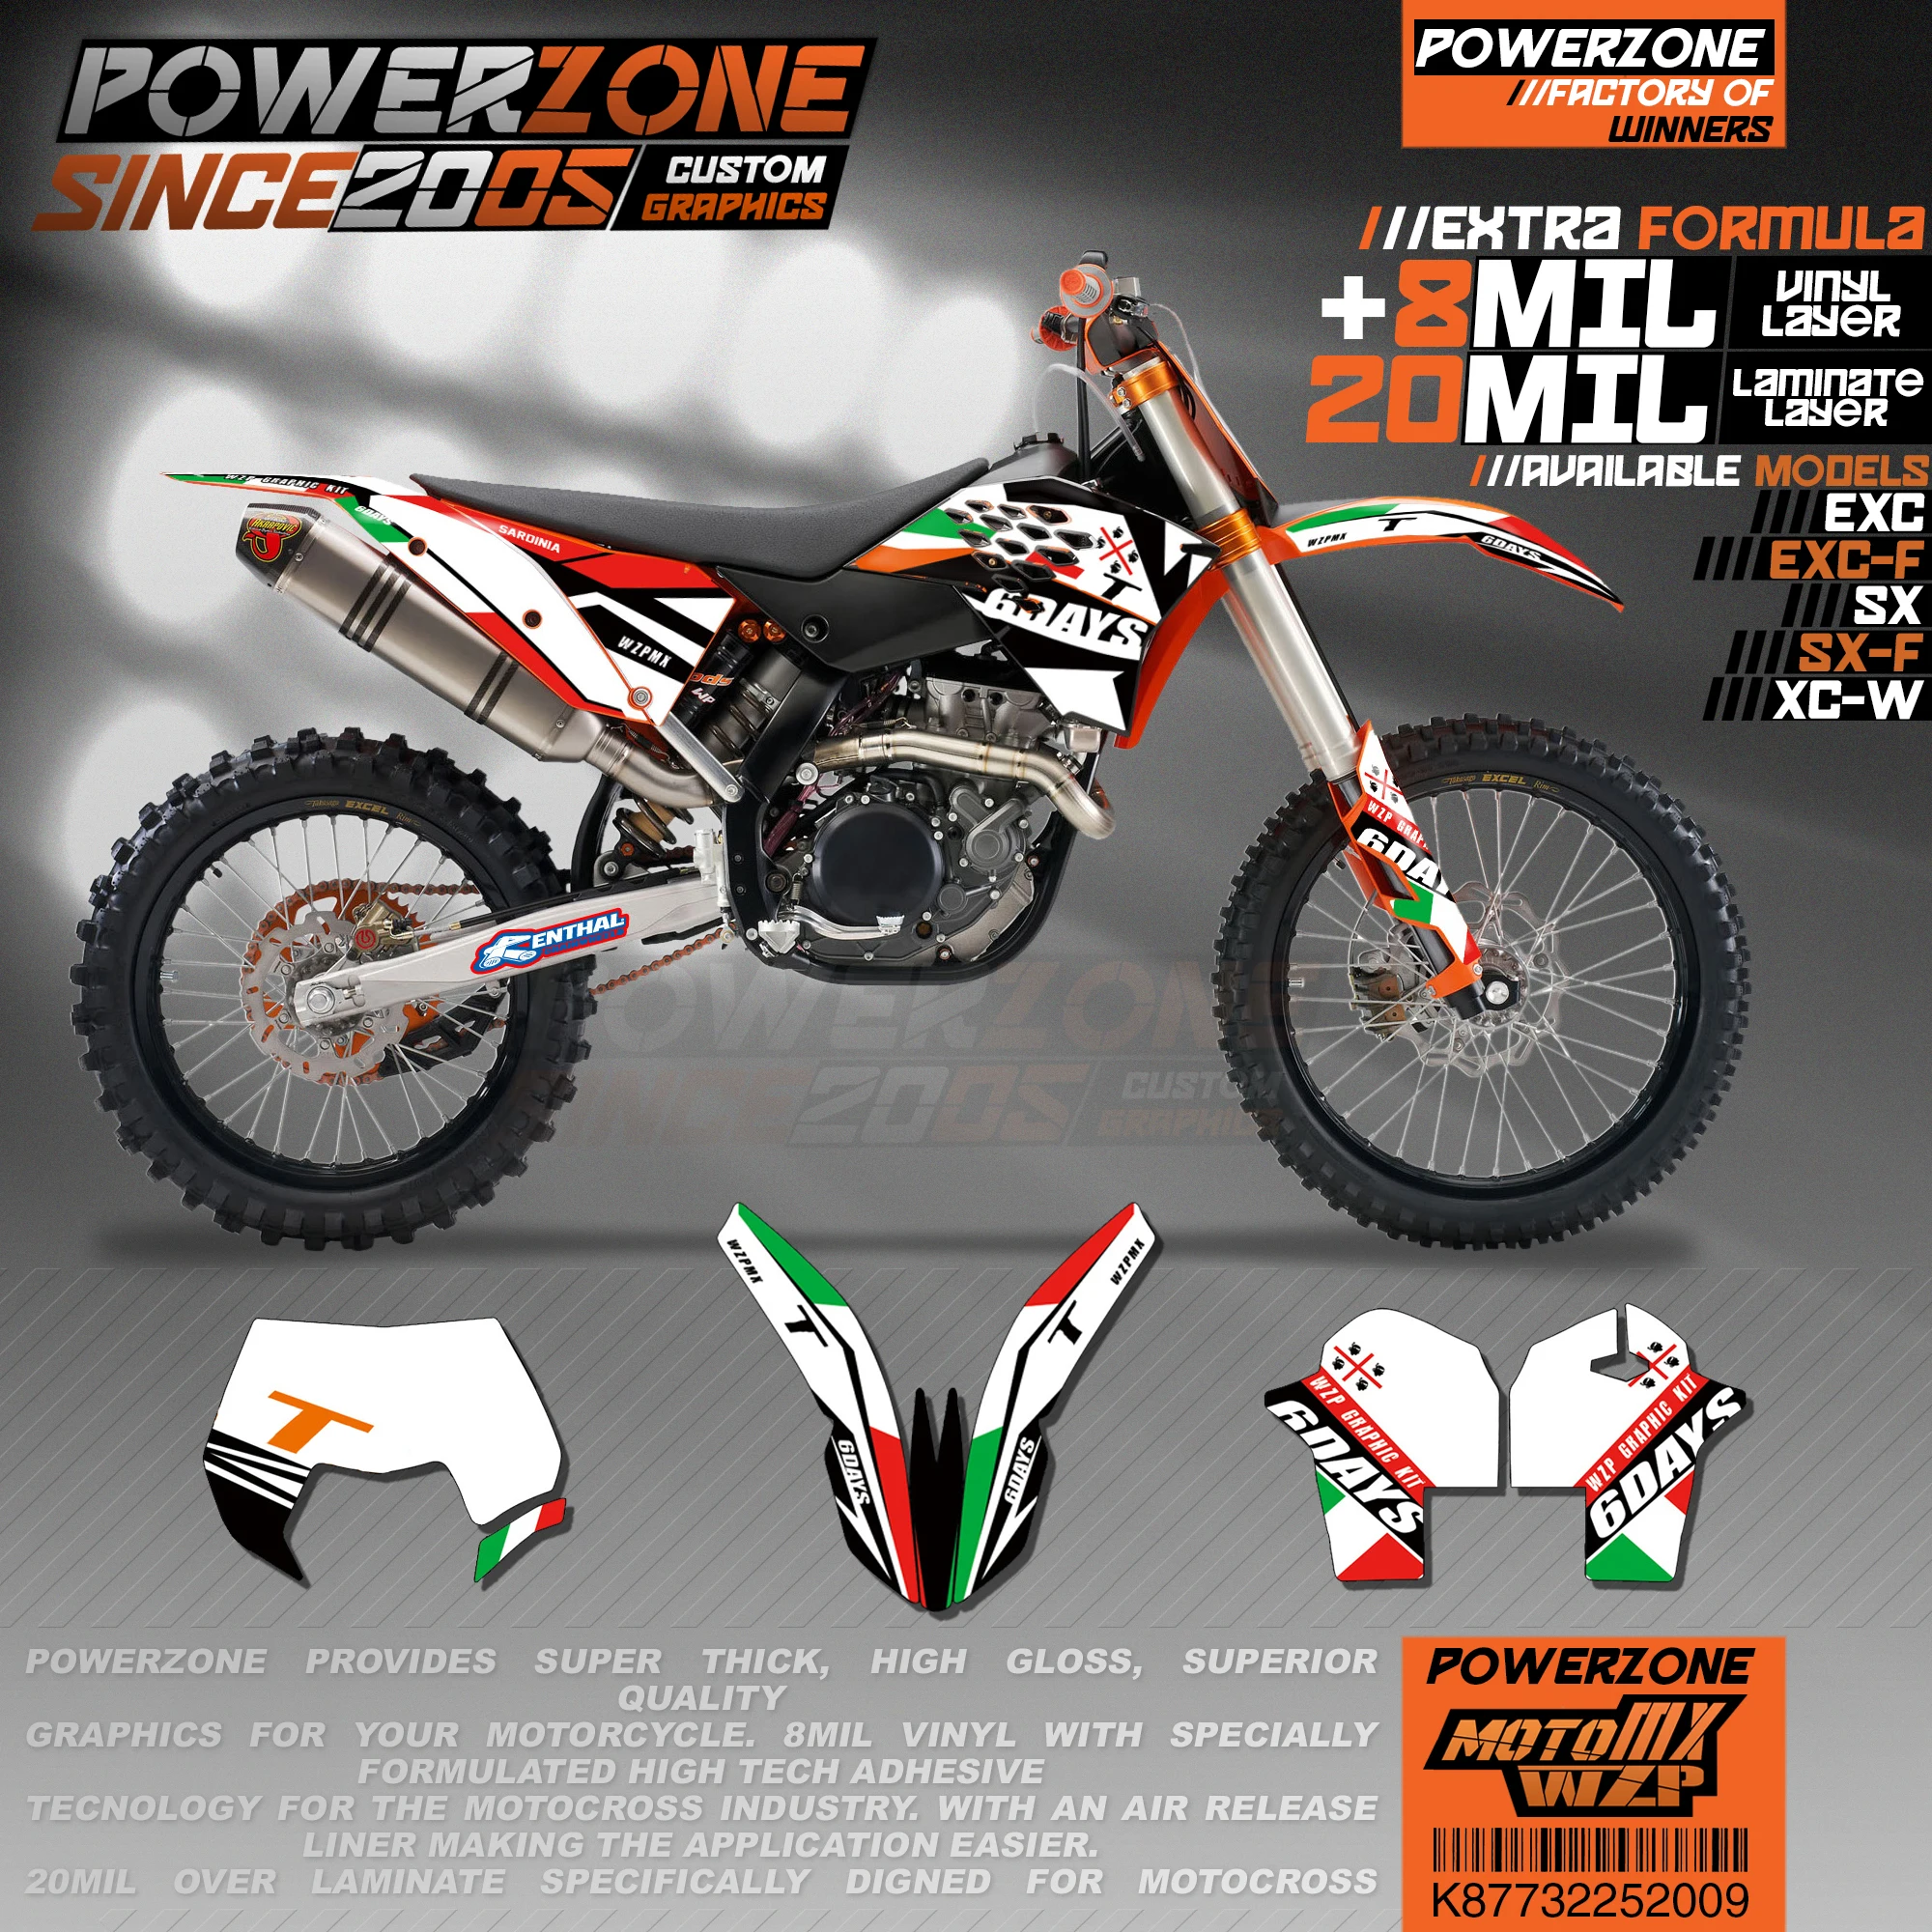 

PowerZone Custom Team Graphics Backgrounds Decals 3M Stickers Kit For KTM SX SXF MX EXC XCW Enduro 125cc to 500cc 2007-2011 009